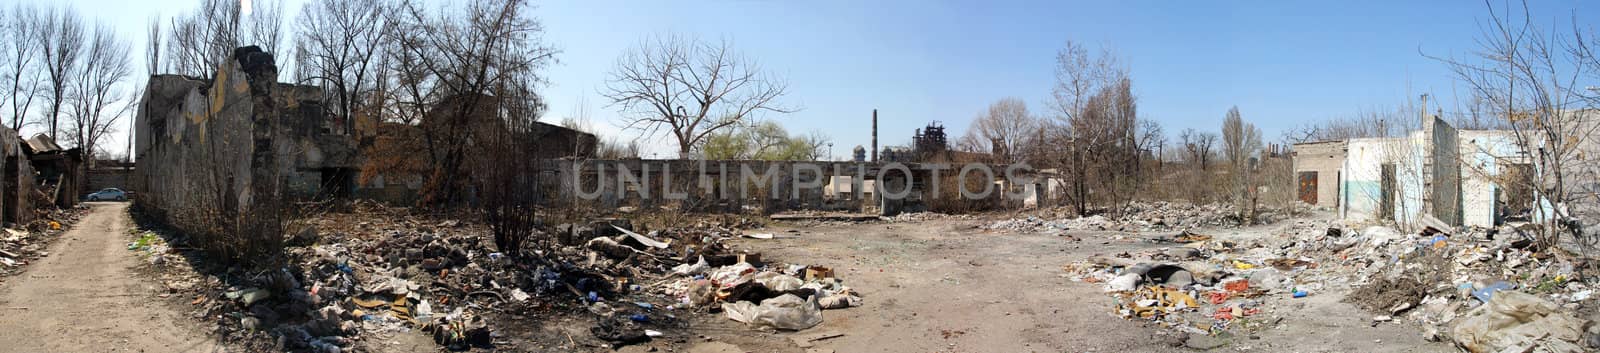 Ruins of city, trash, panorama, ecology
